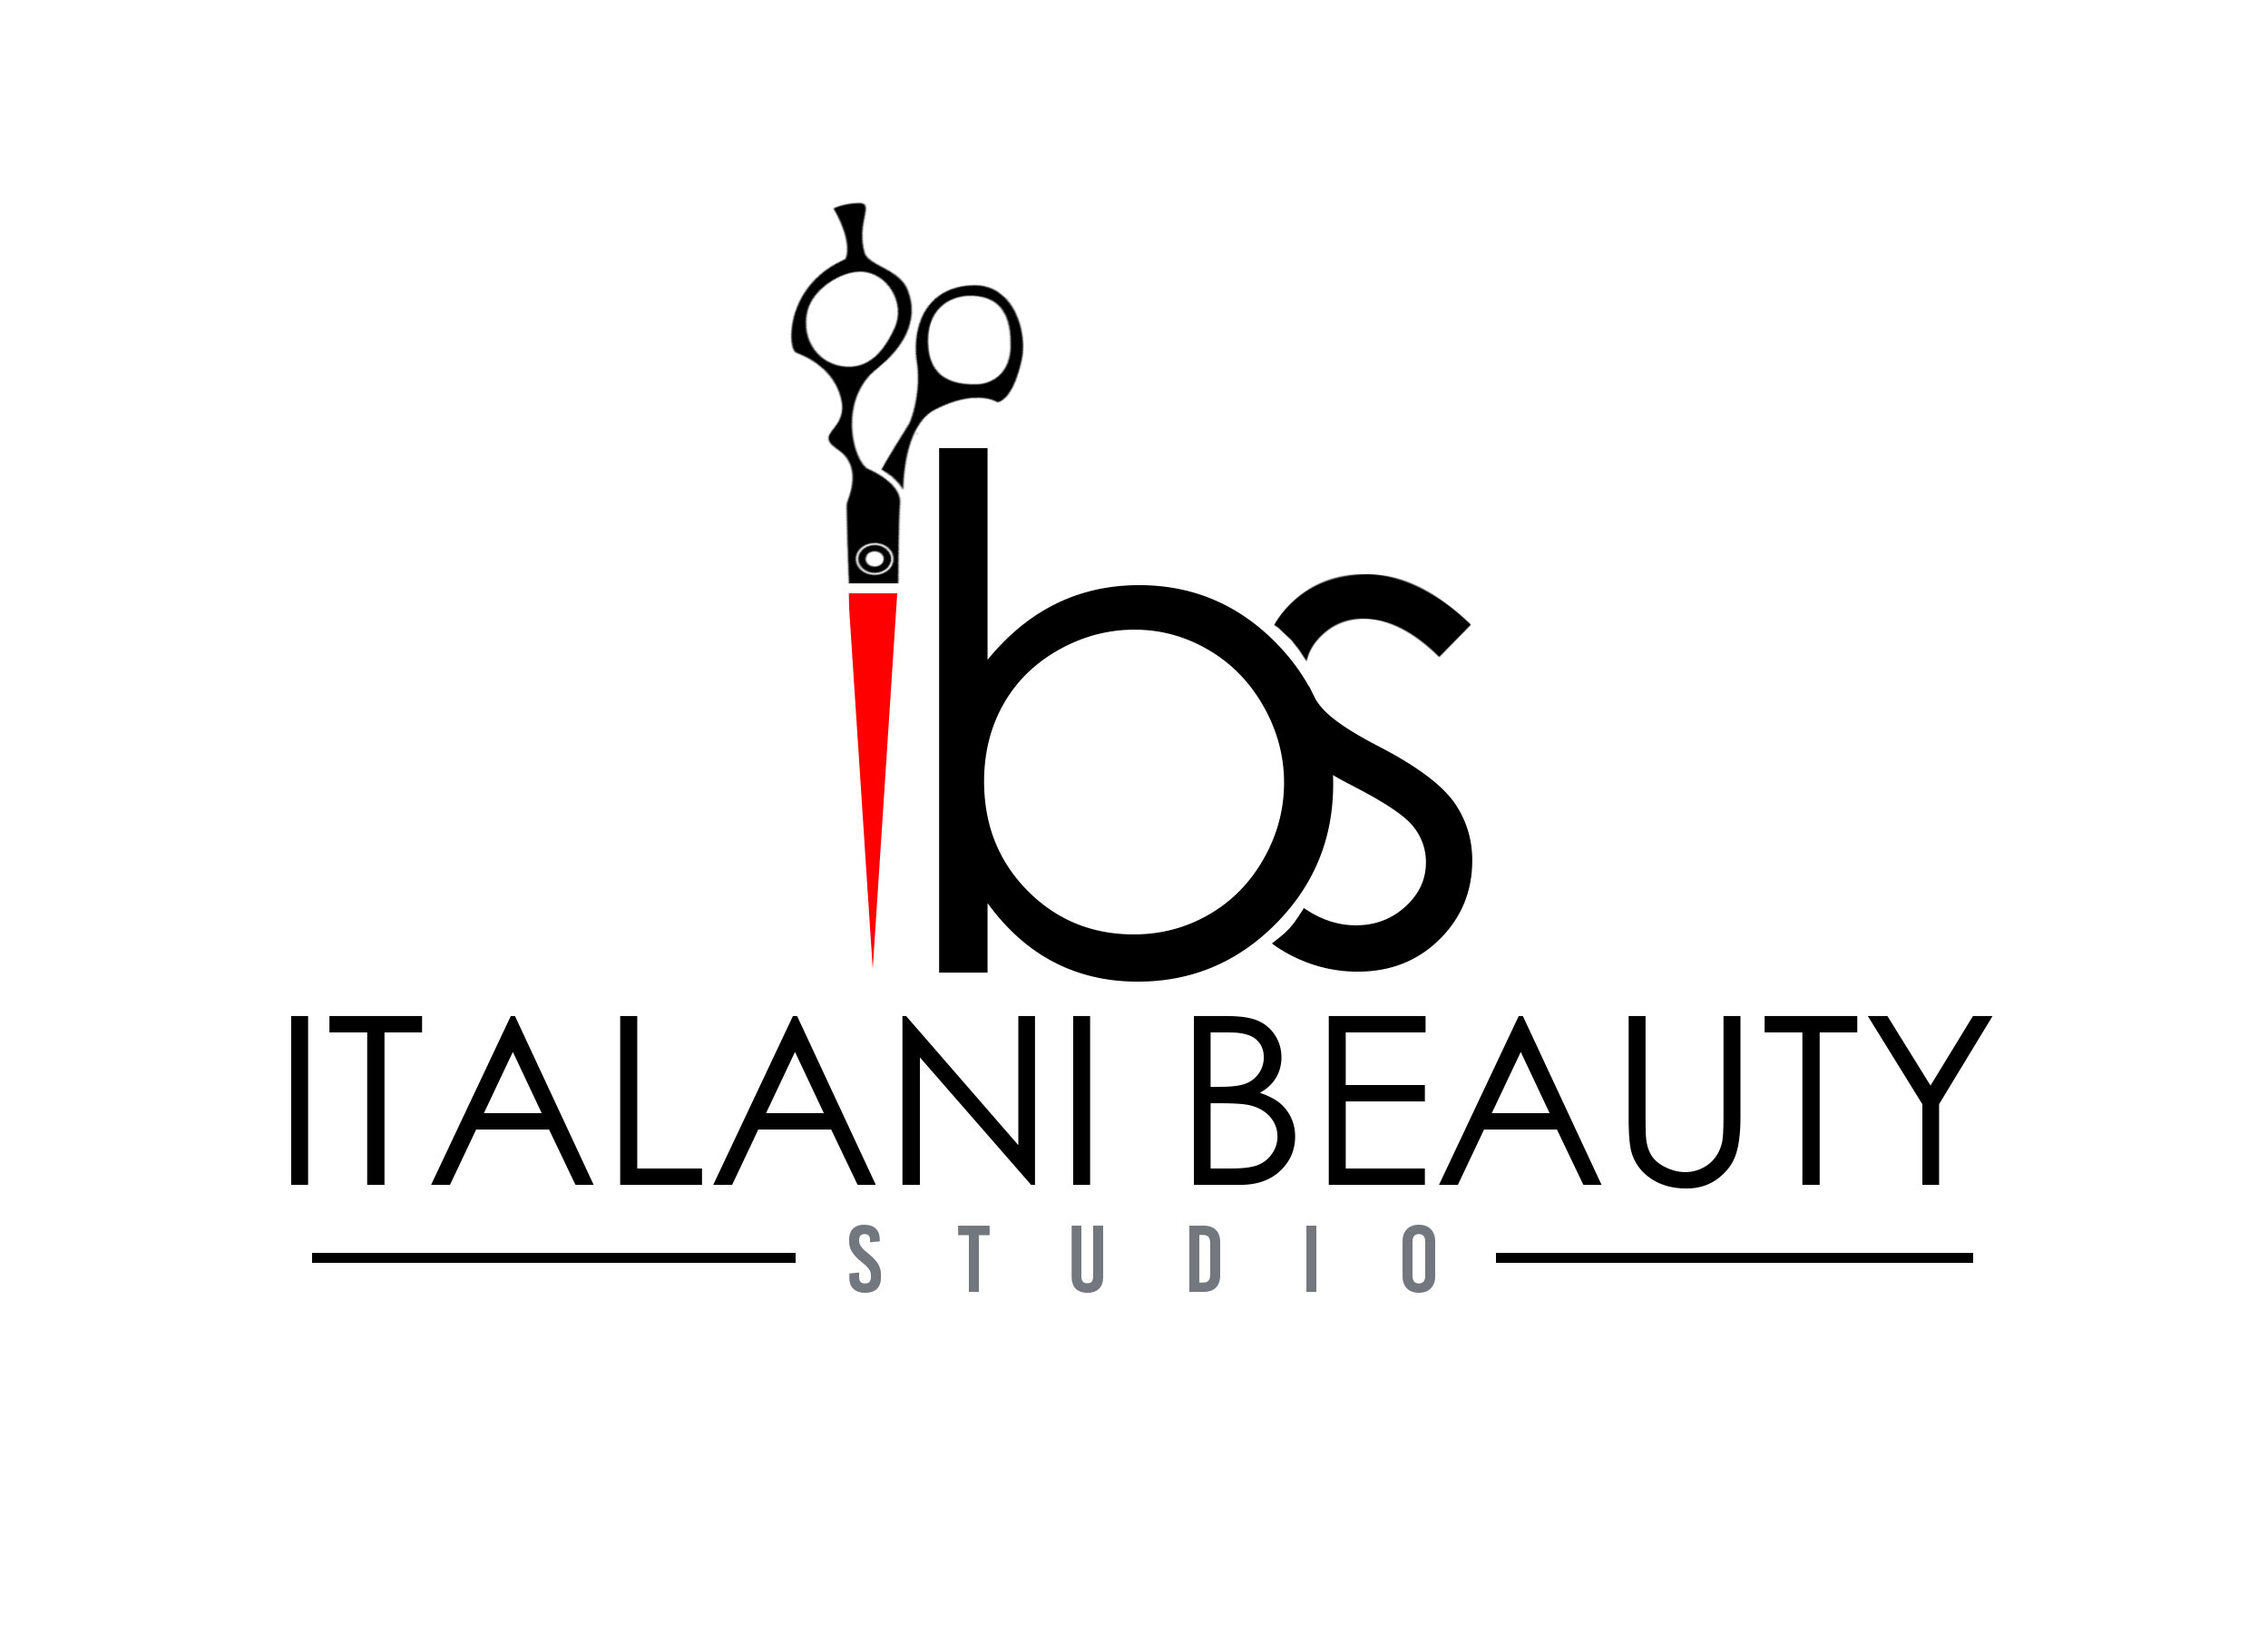 Italani Beauty Studio